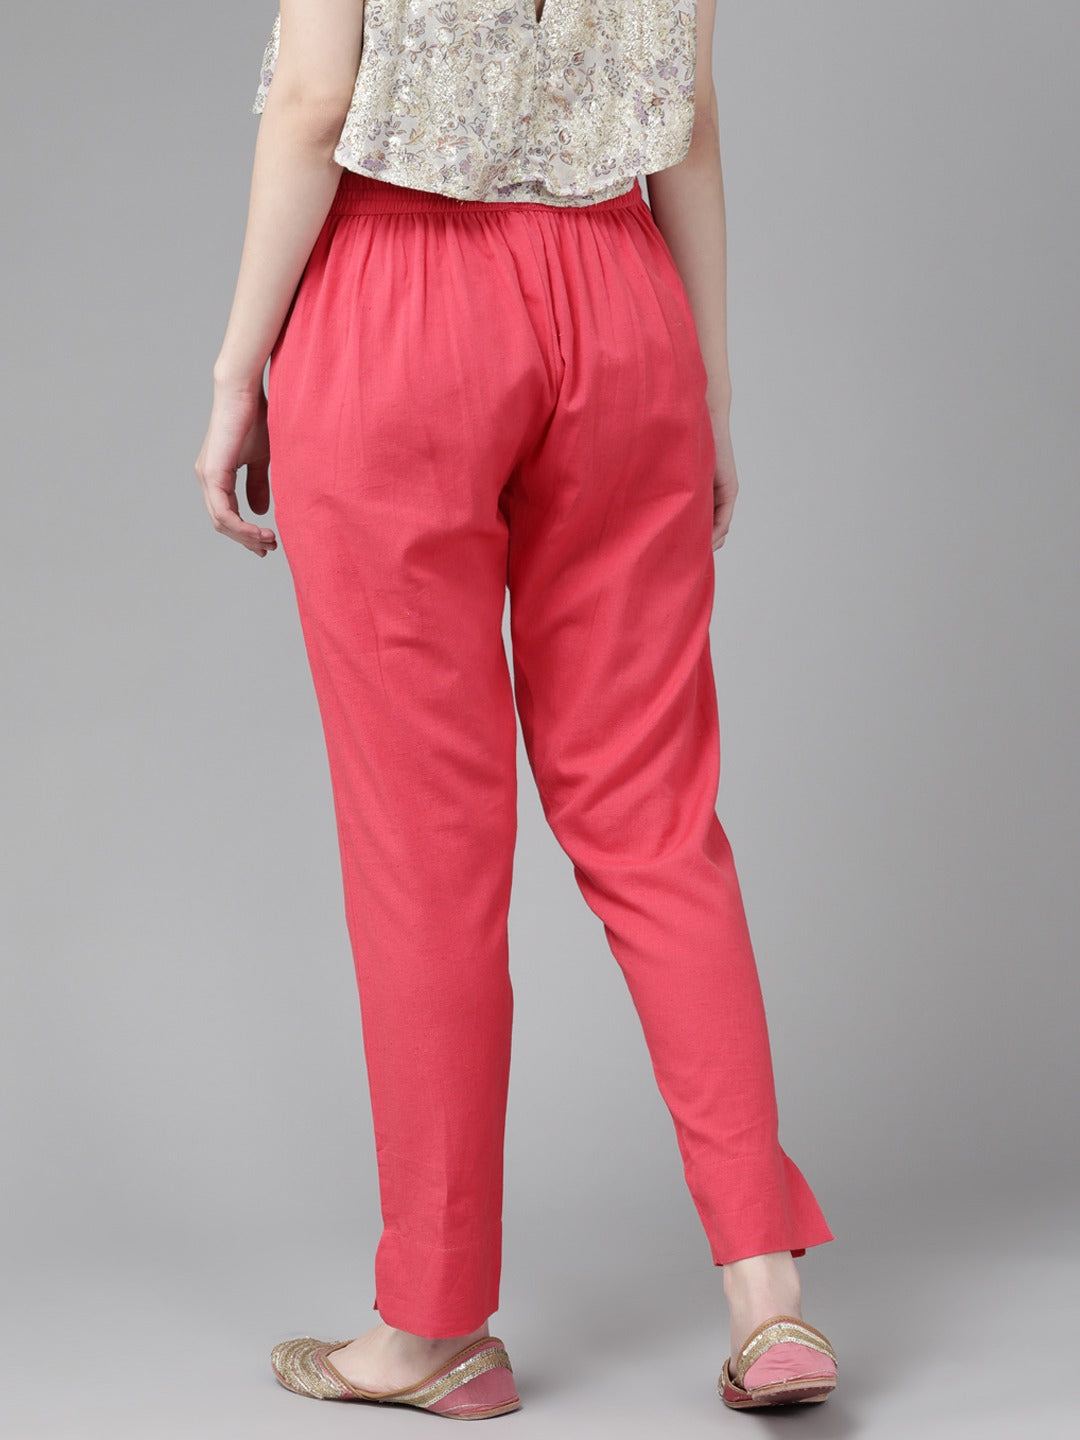 Coral Pink Trousers-Yufta Store-4206PNTPCS